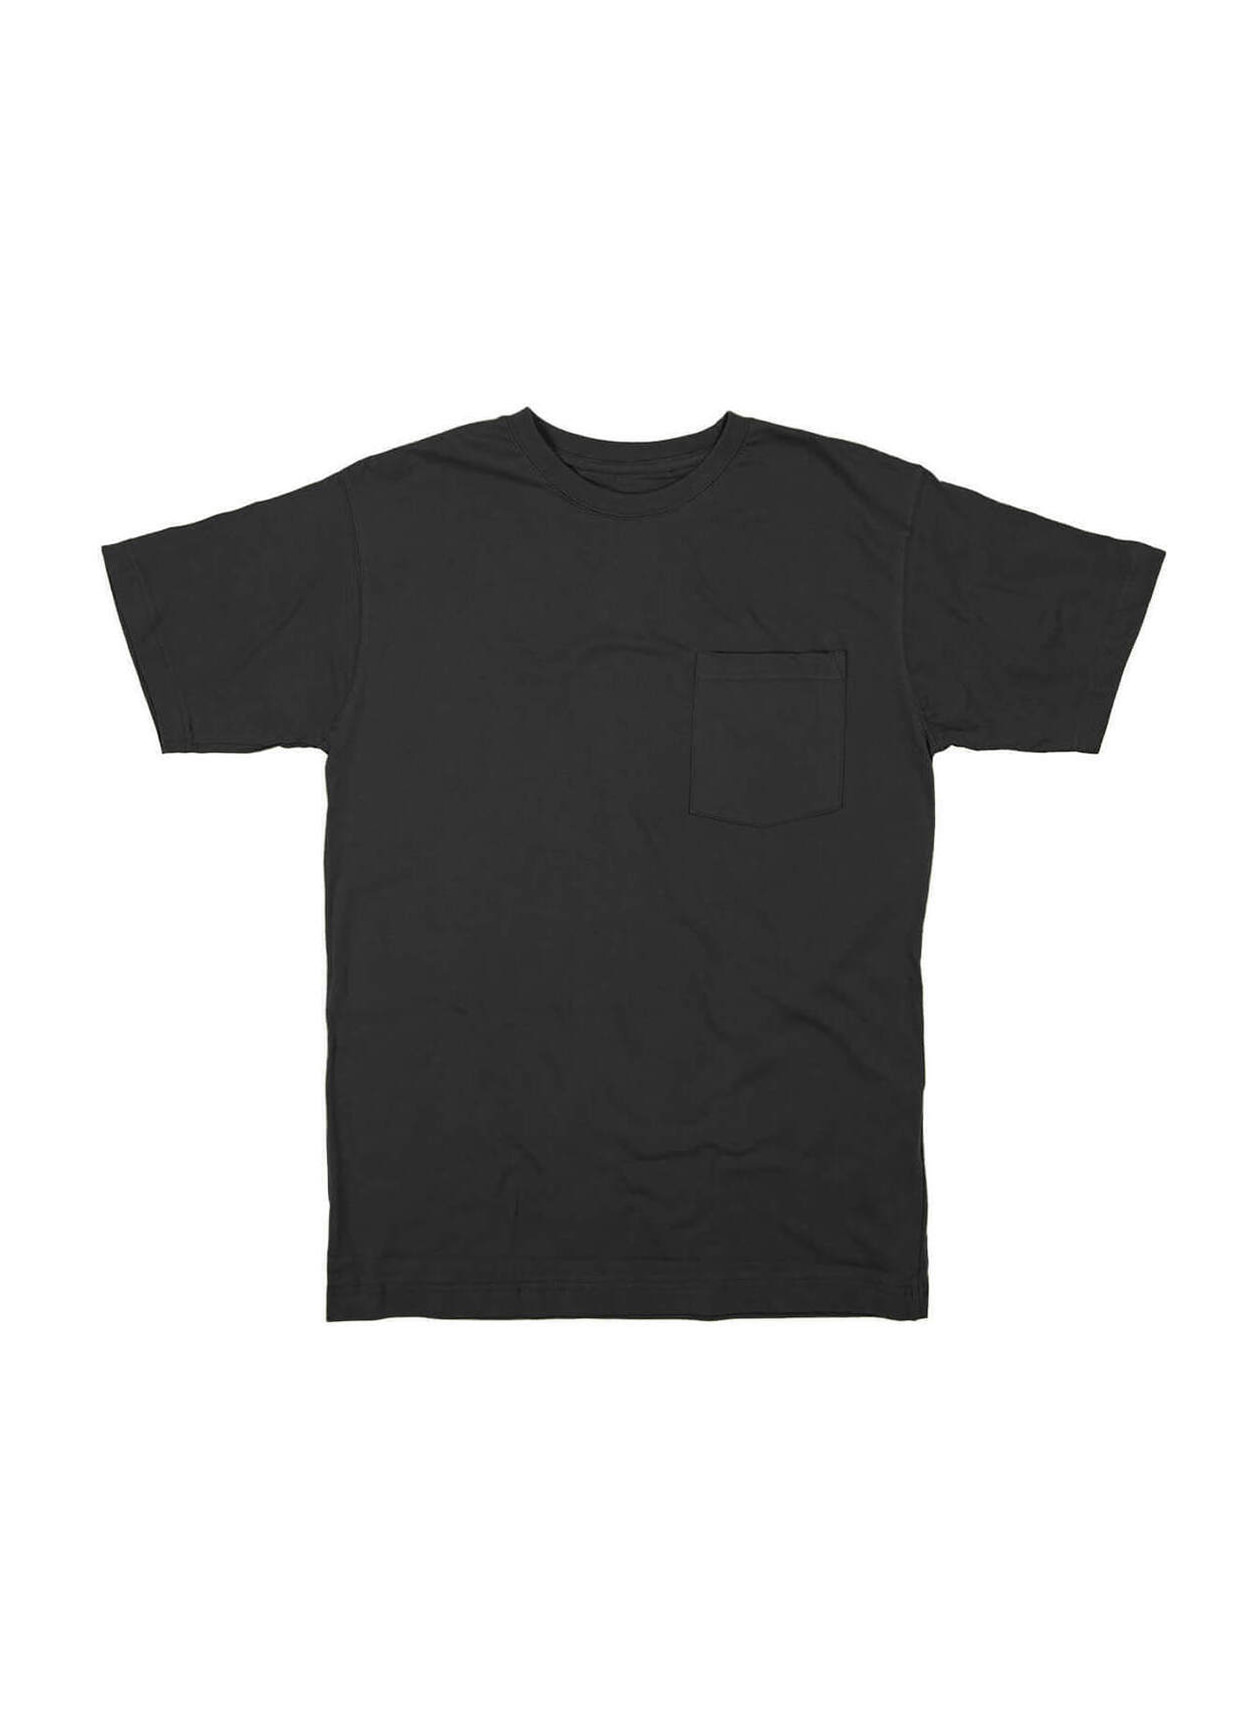 Berne Men's Black Heavyweight Pocket T-Shirt